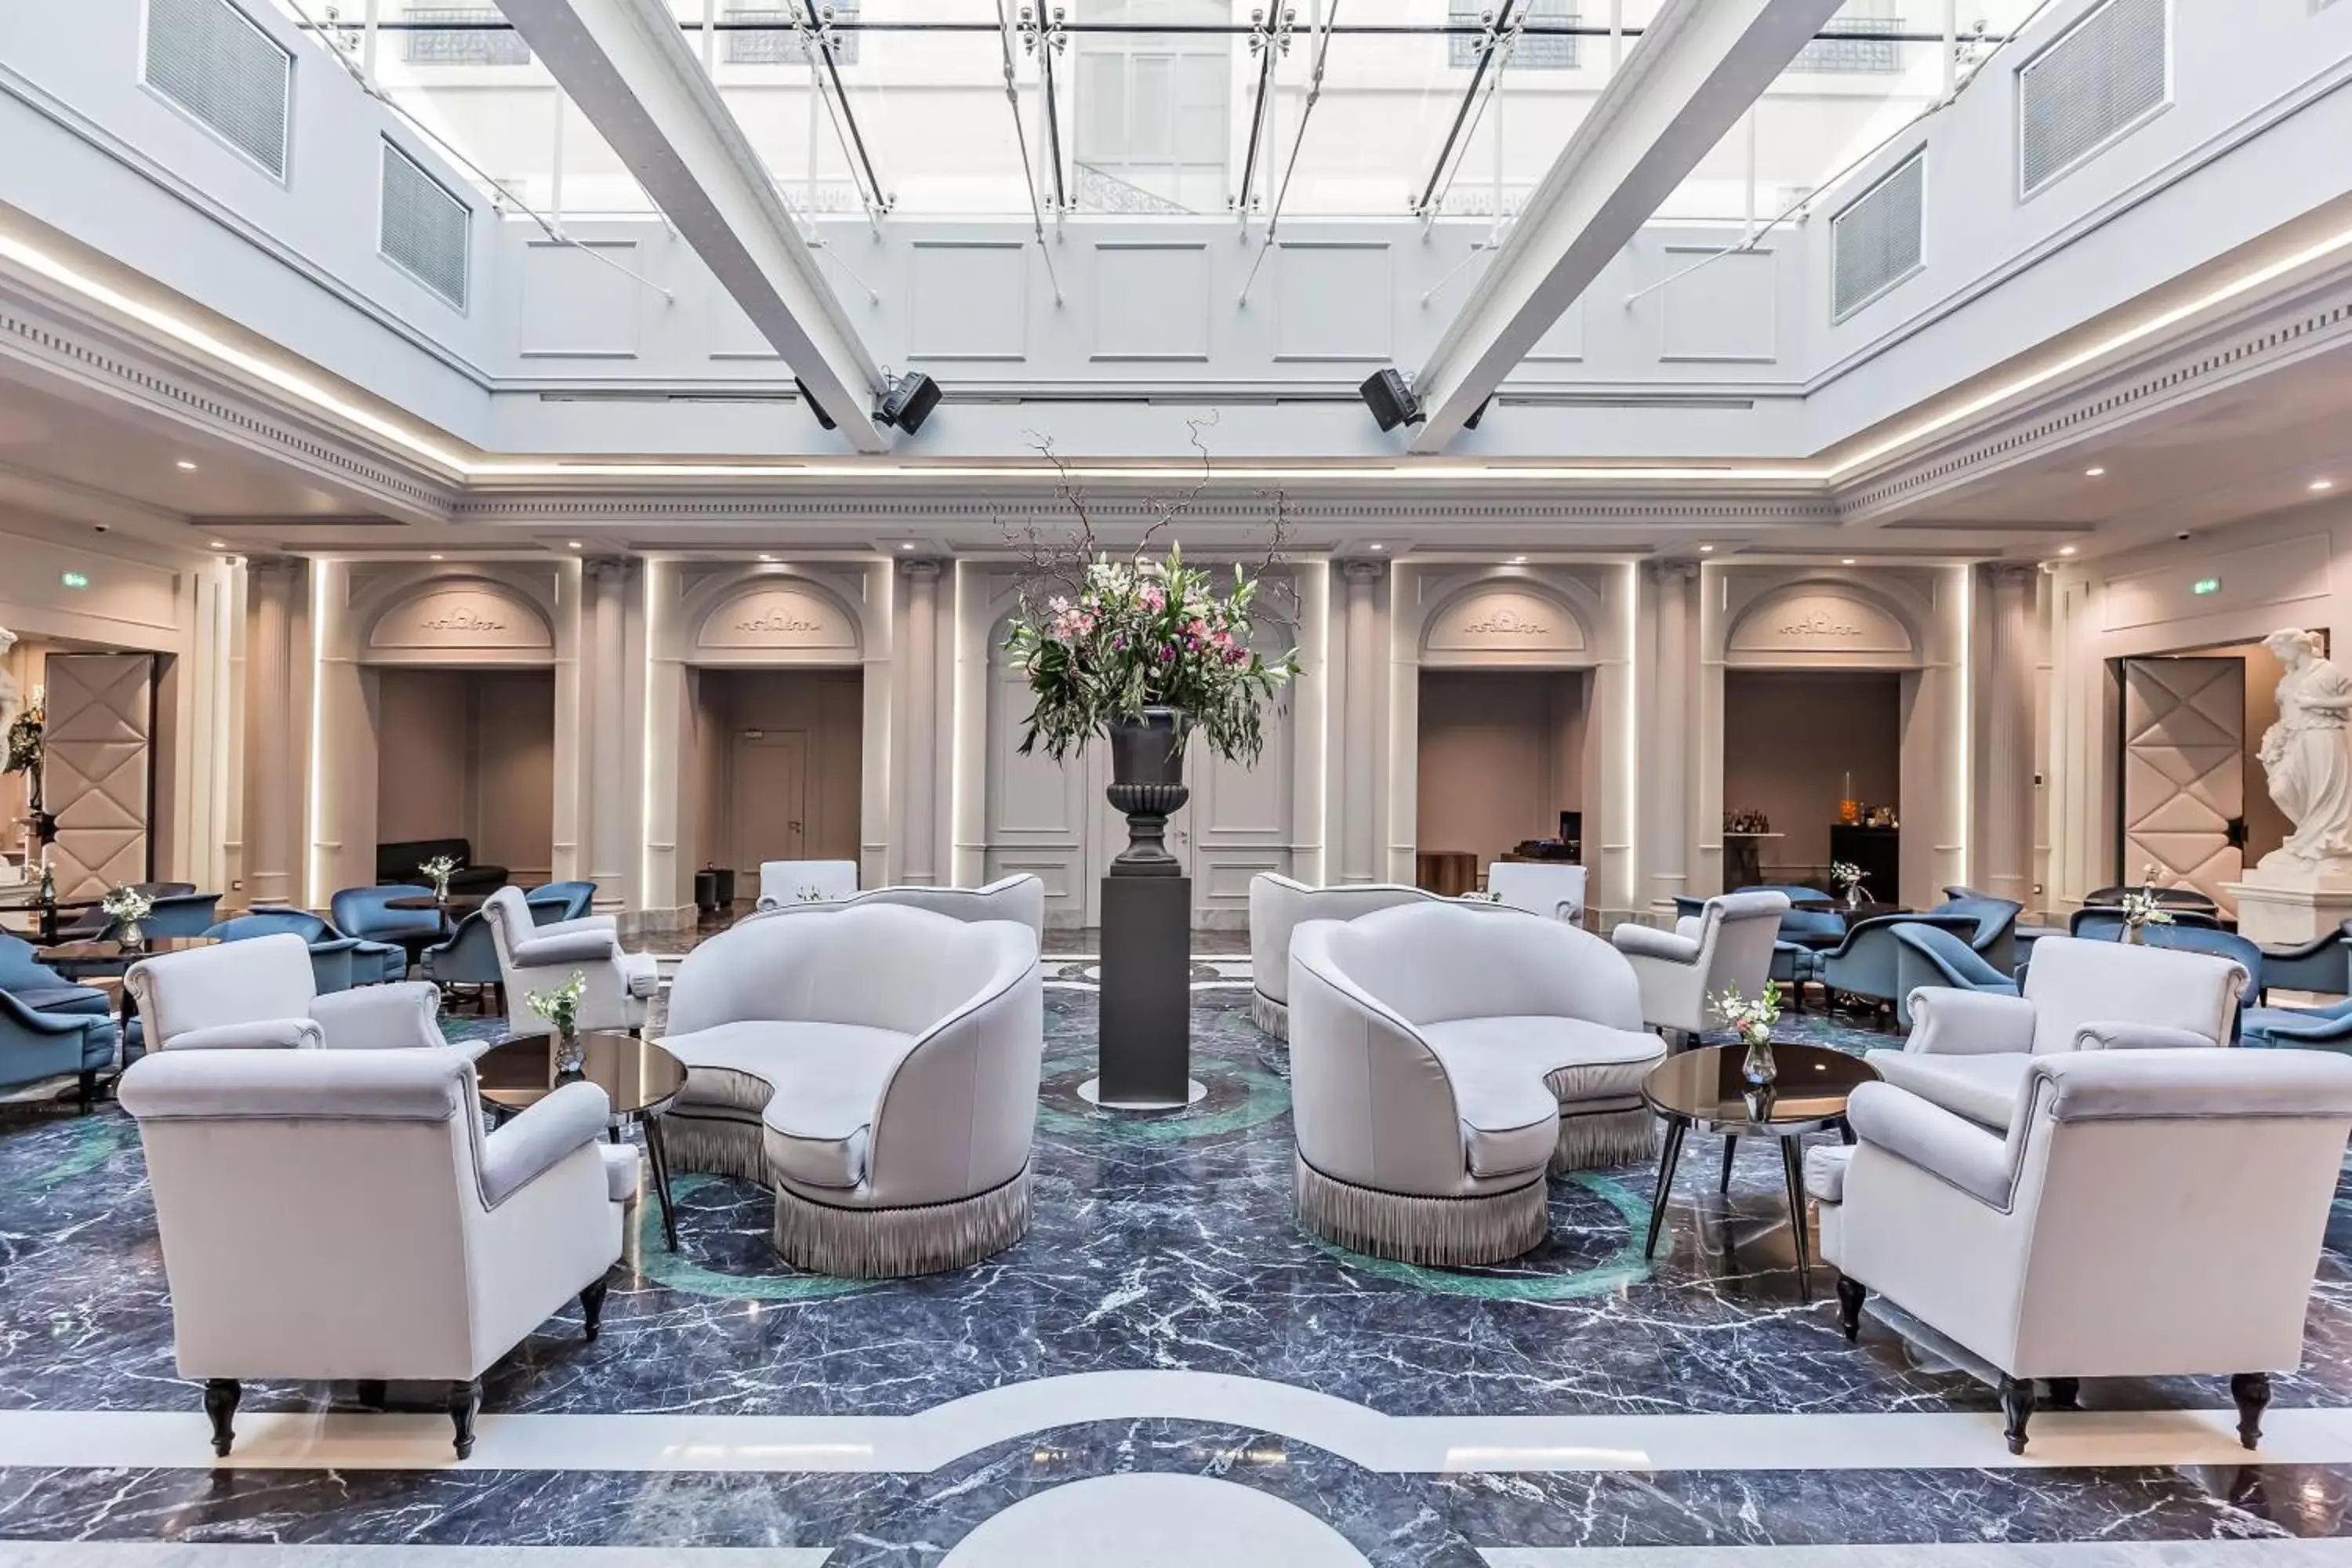 Lobby or reception in Boscolo Lyon Hotel & Spa